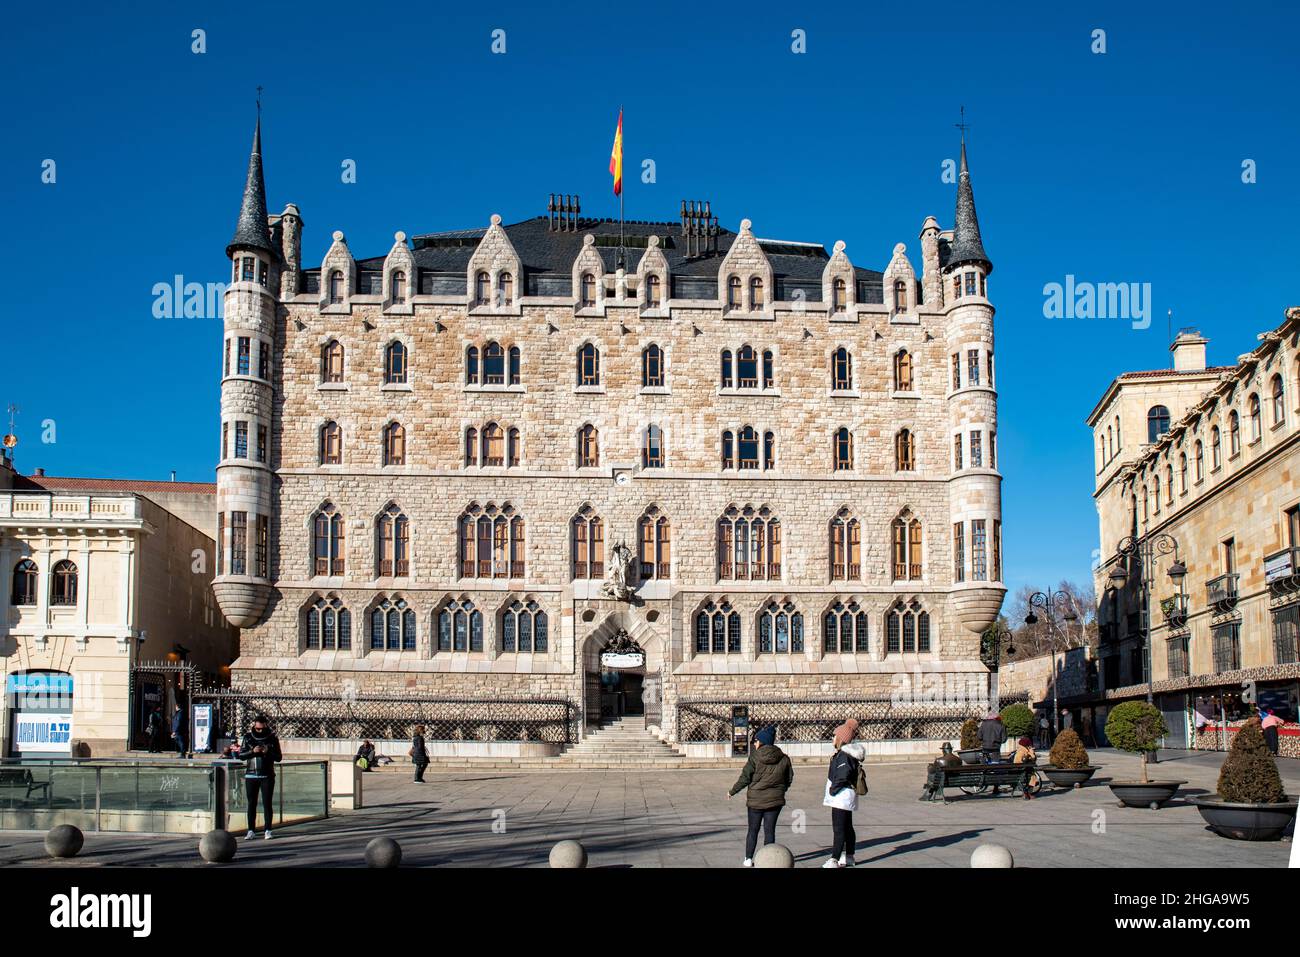 Leon, Spain; December 2021: Facade of Botines Palace in Leon (Castilla y Leon), Spain Stock Photo